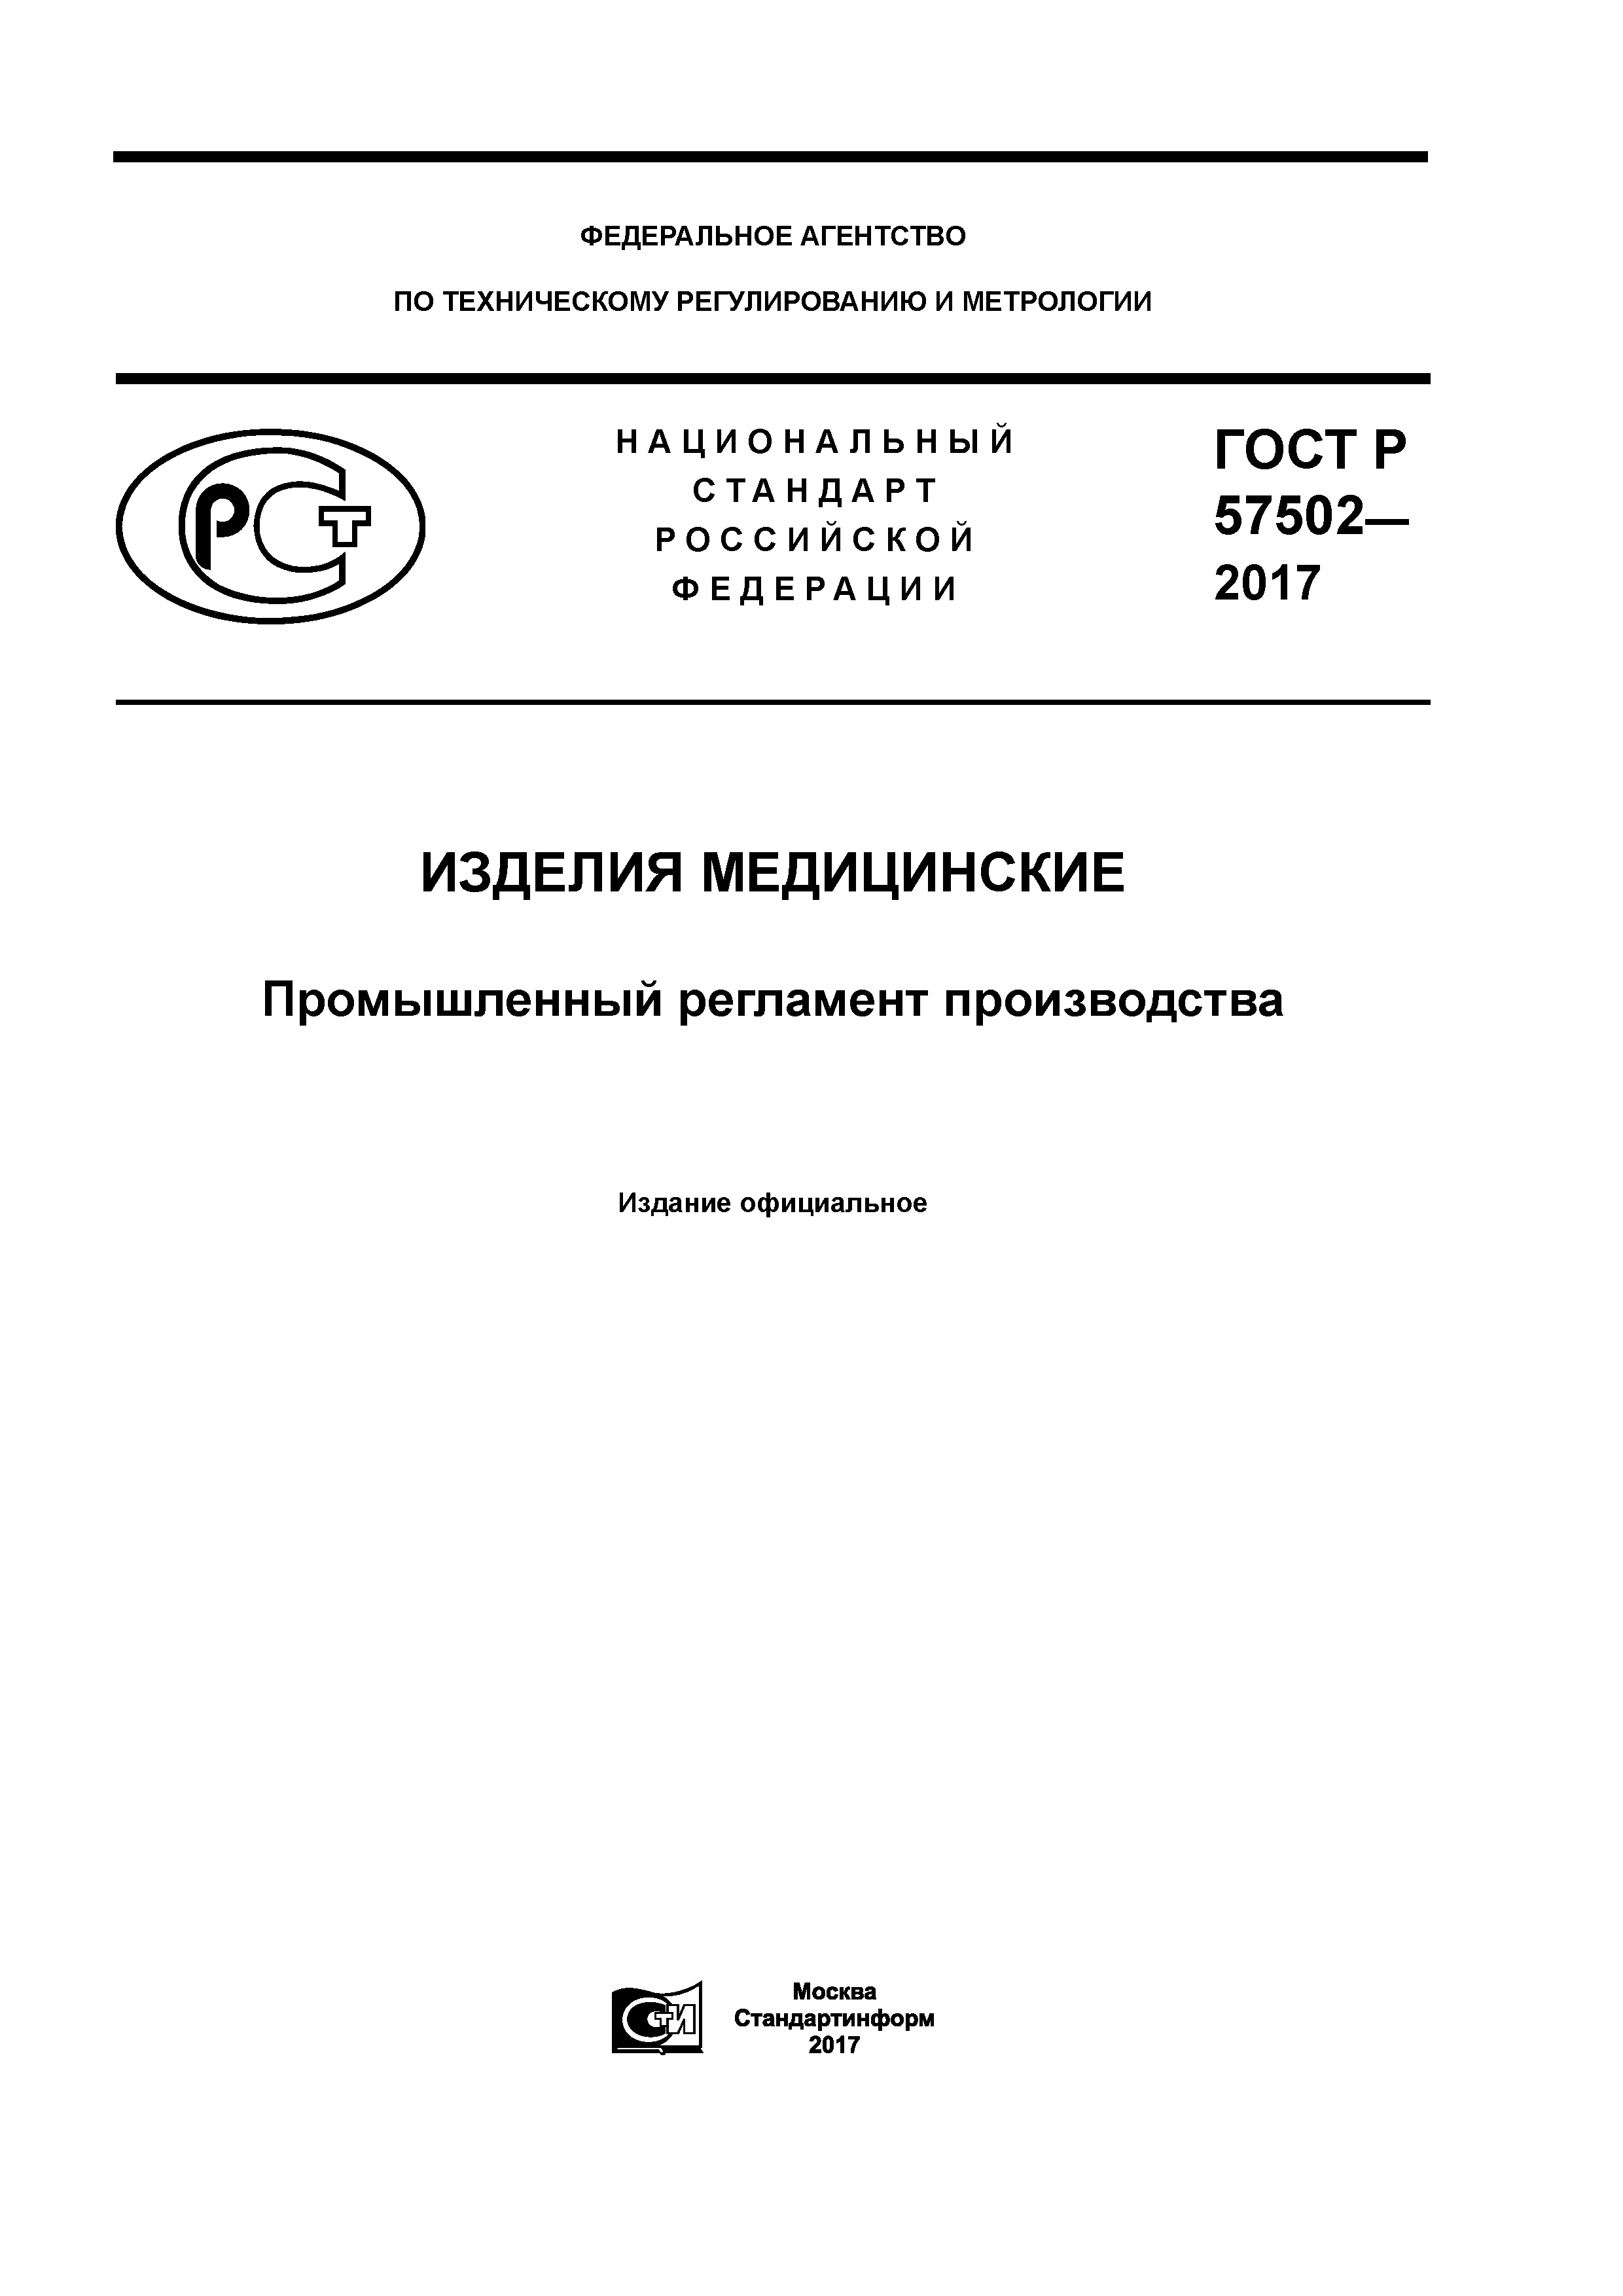 ГОСТ Р 57502-2017